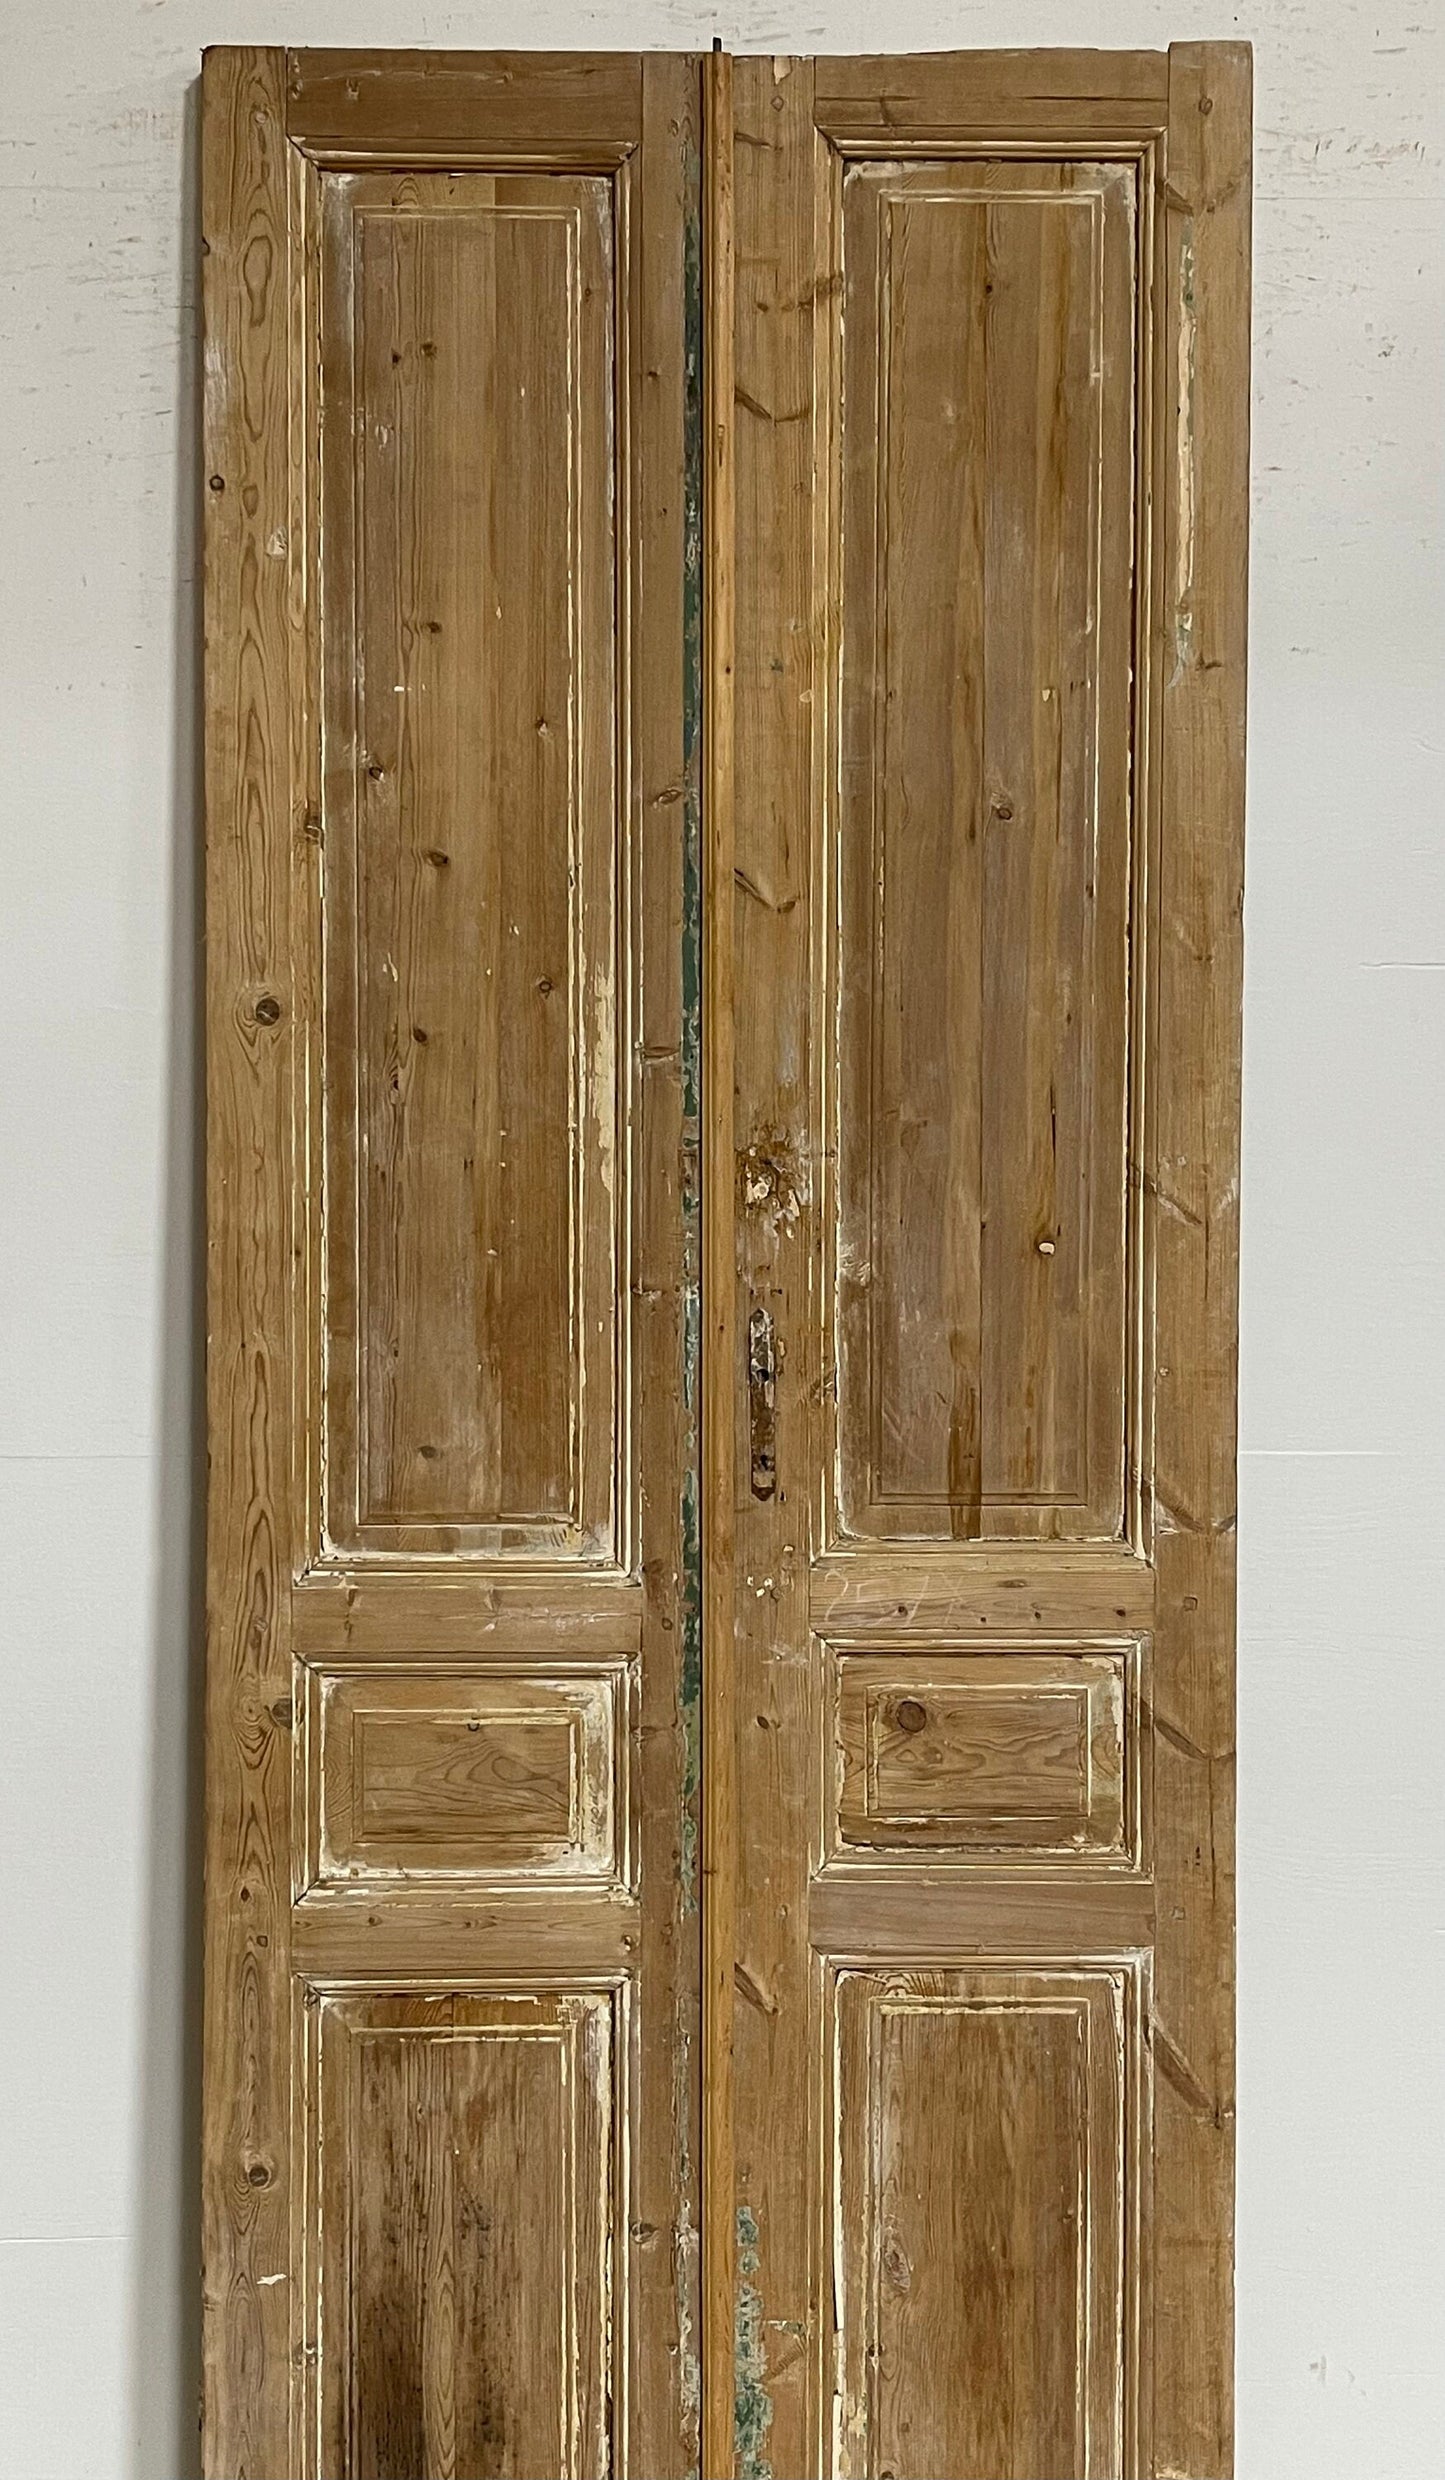 Antique French panel doors (100.5x38.75) G0139s